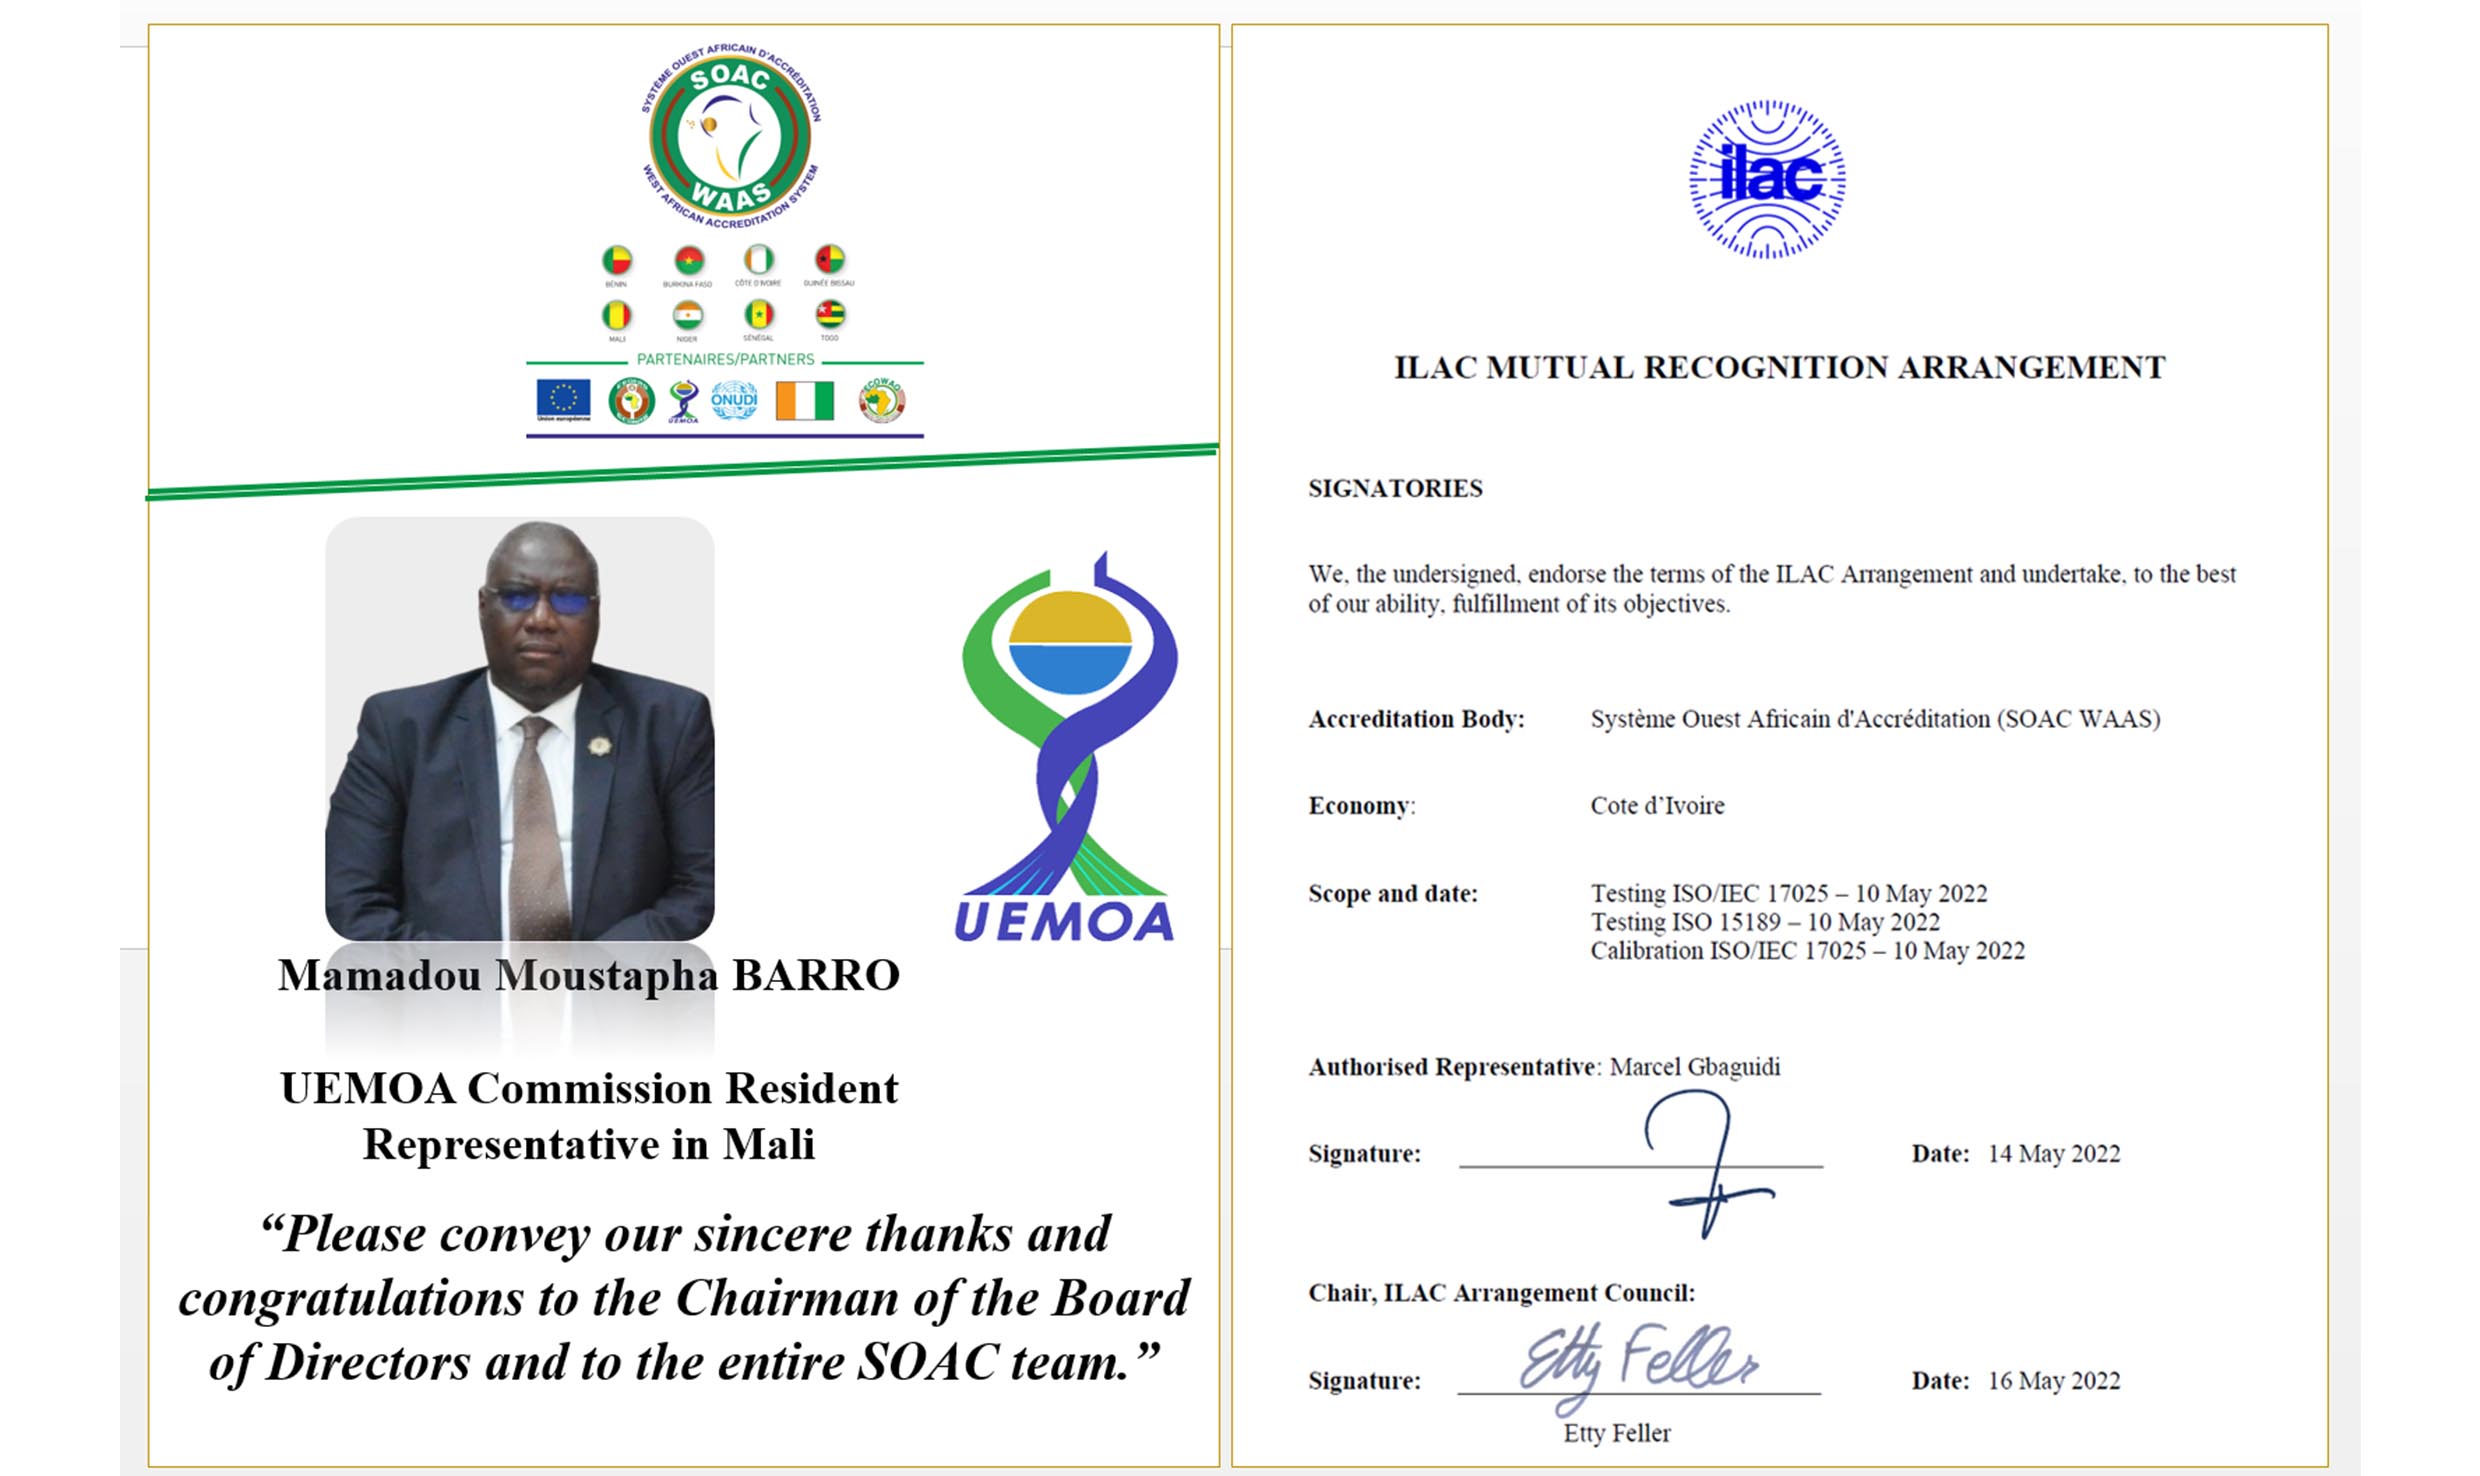 Mr Mamadou BARRO, UEMOA Commission Resident Representative, Mali